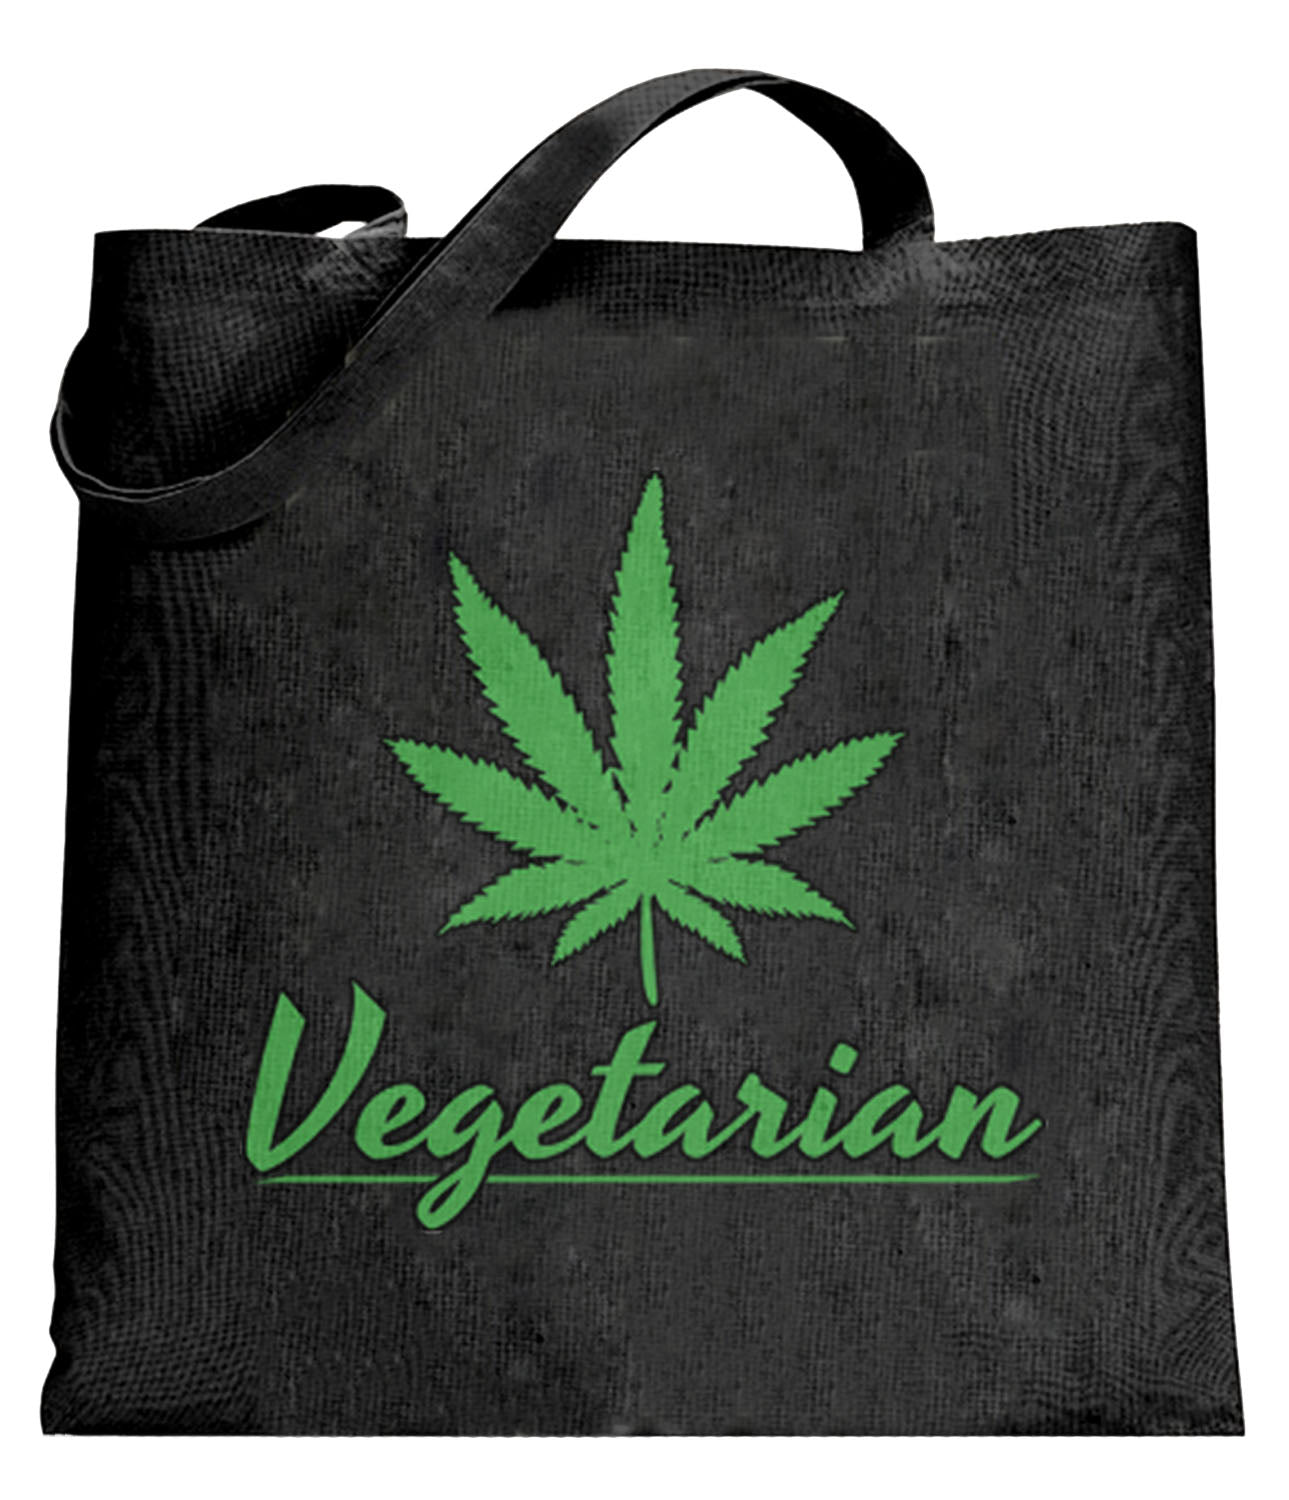 Pot Leaf Vegetarian Tote Bag